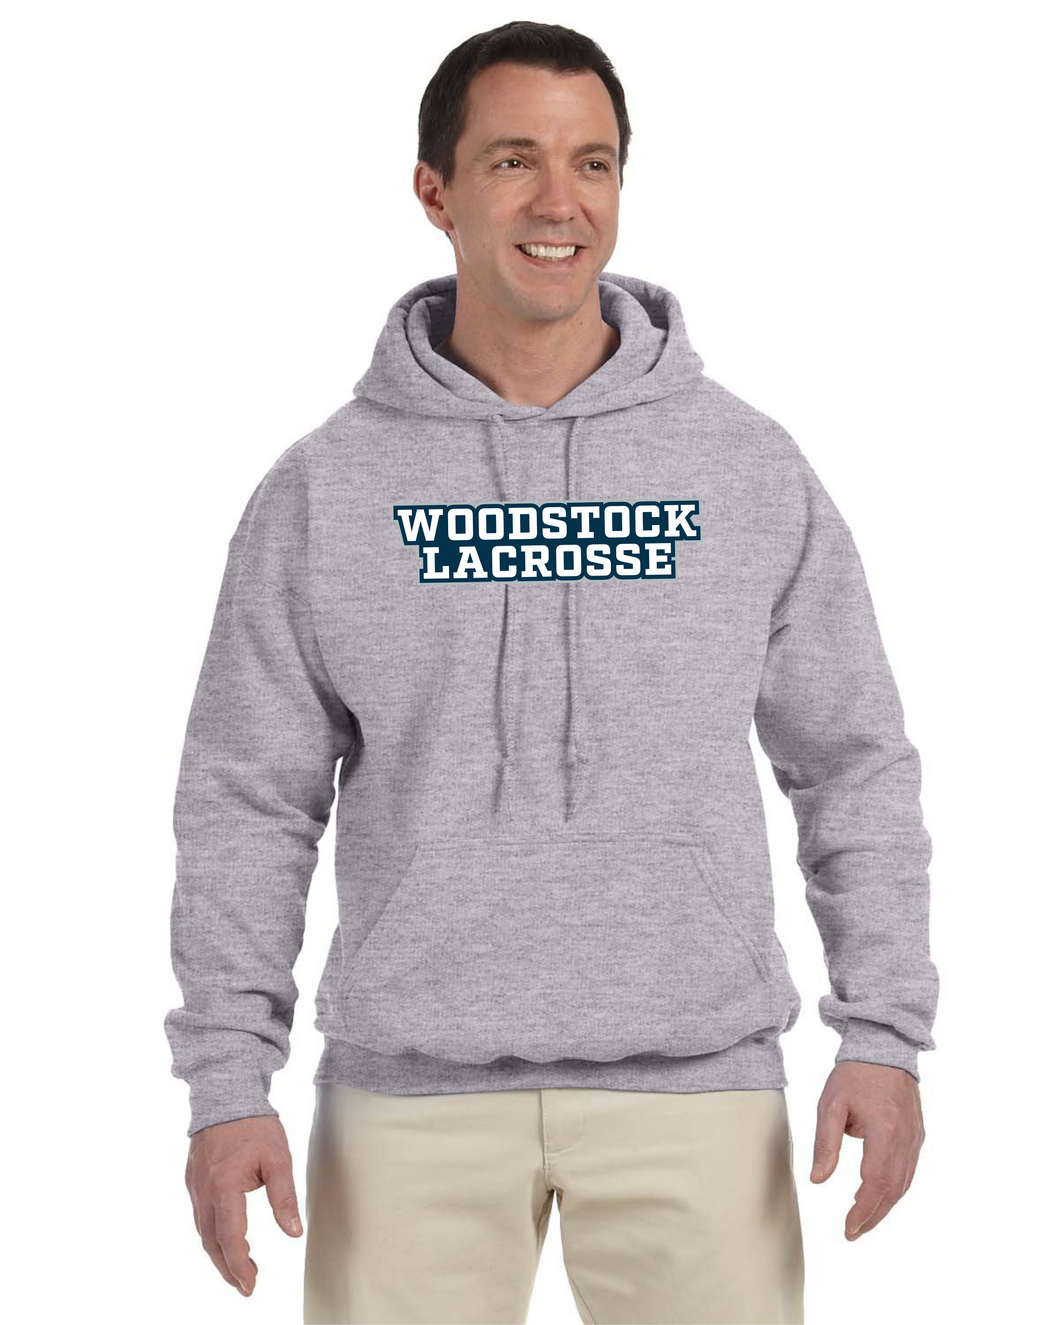 WW-GLAX-301-3 - Gildan-Hoodie - Woodstock Lacrosse Logo